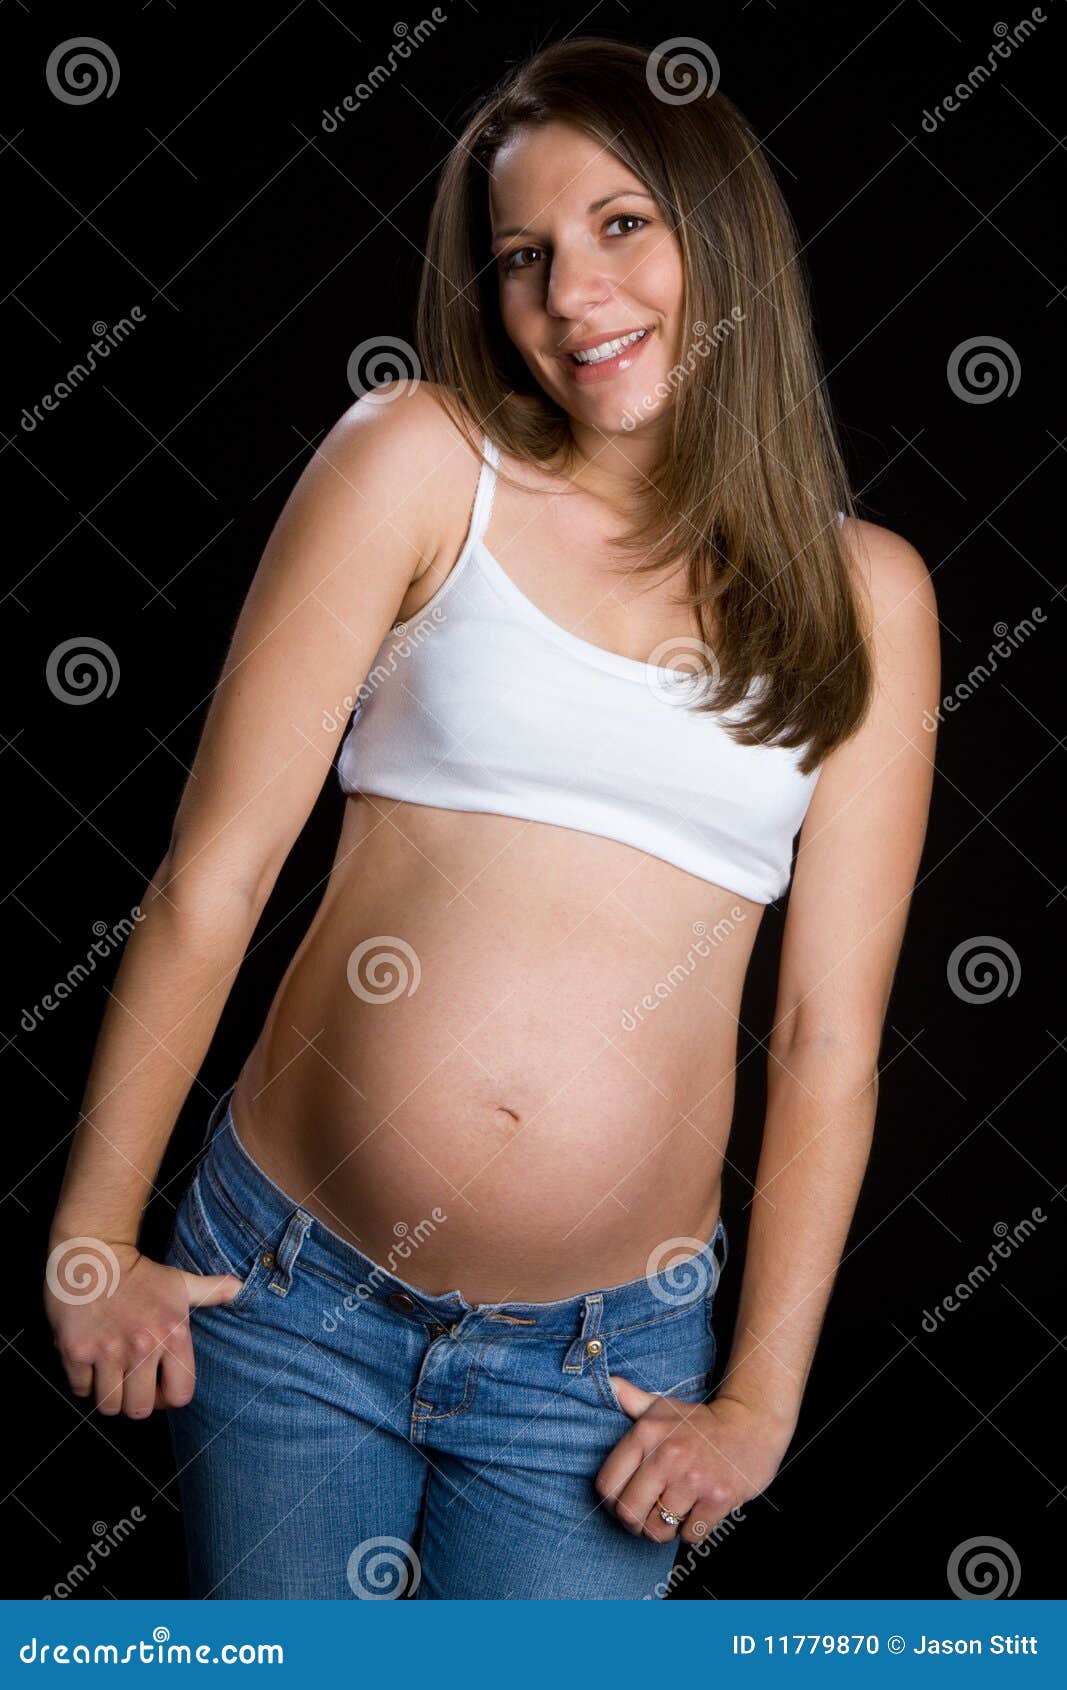 Teen Pregnant Gallery